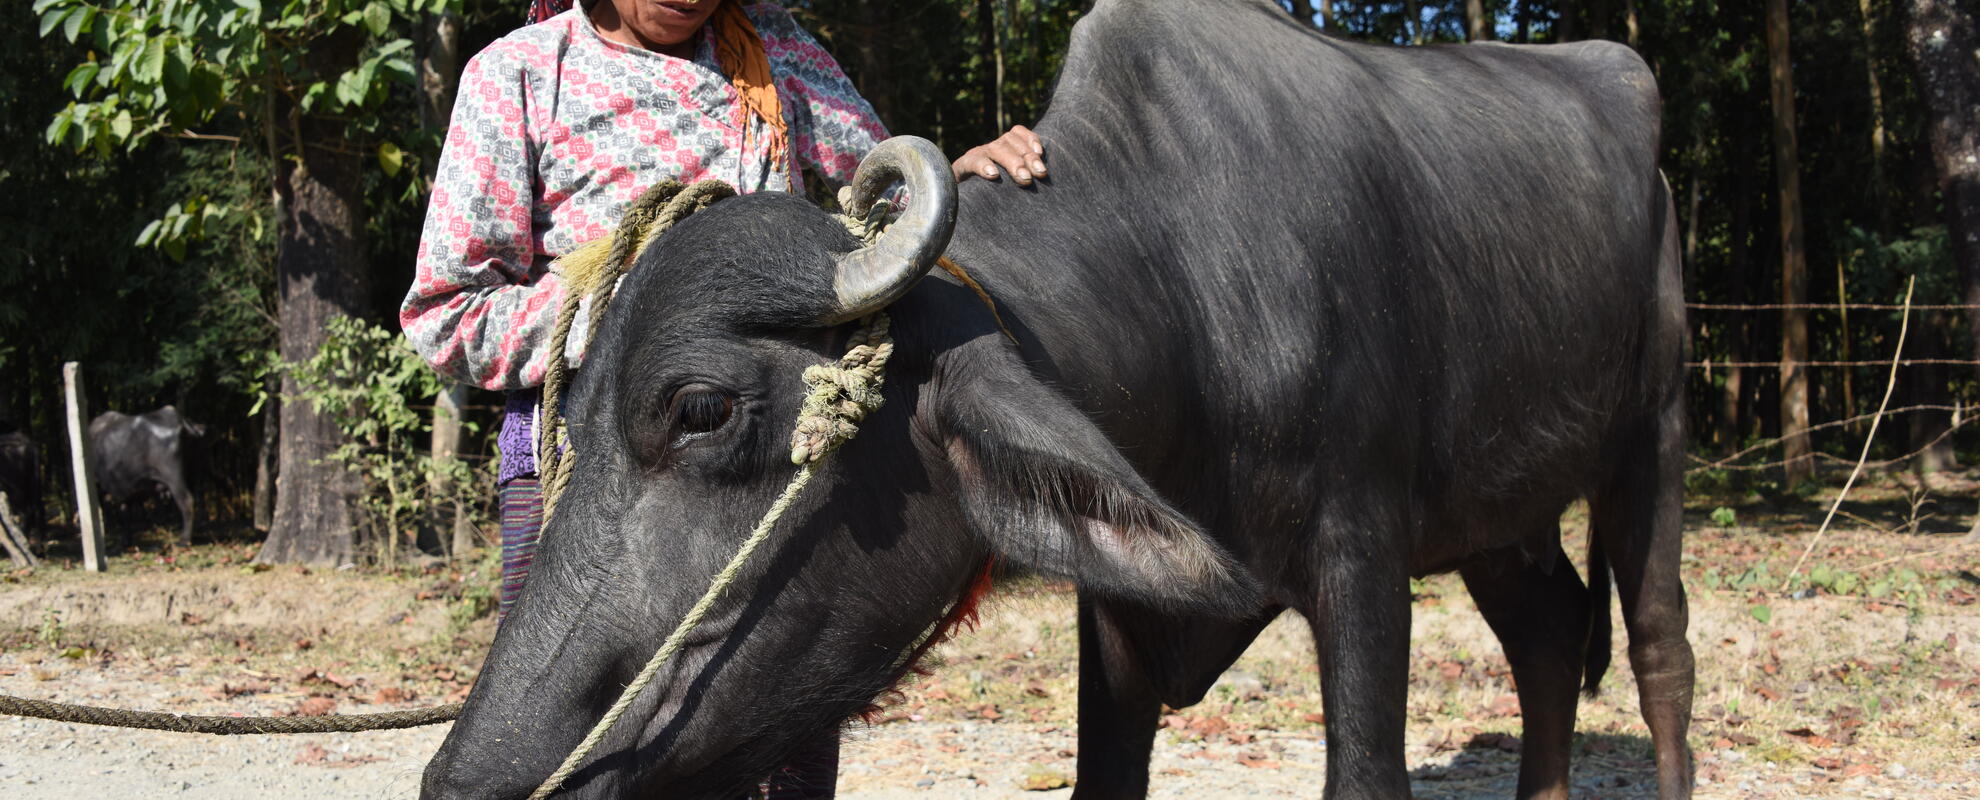 Nepali woman farmer with buffalo